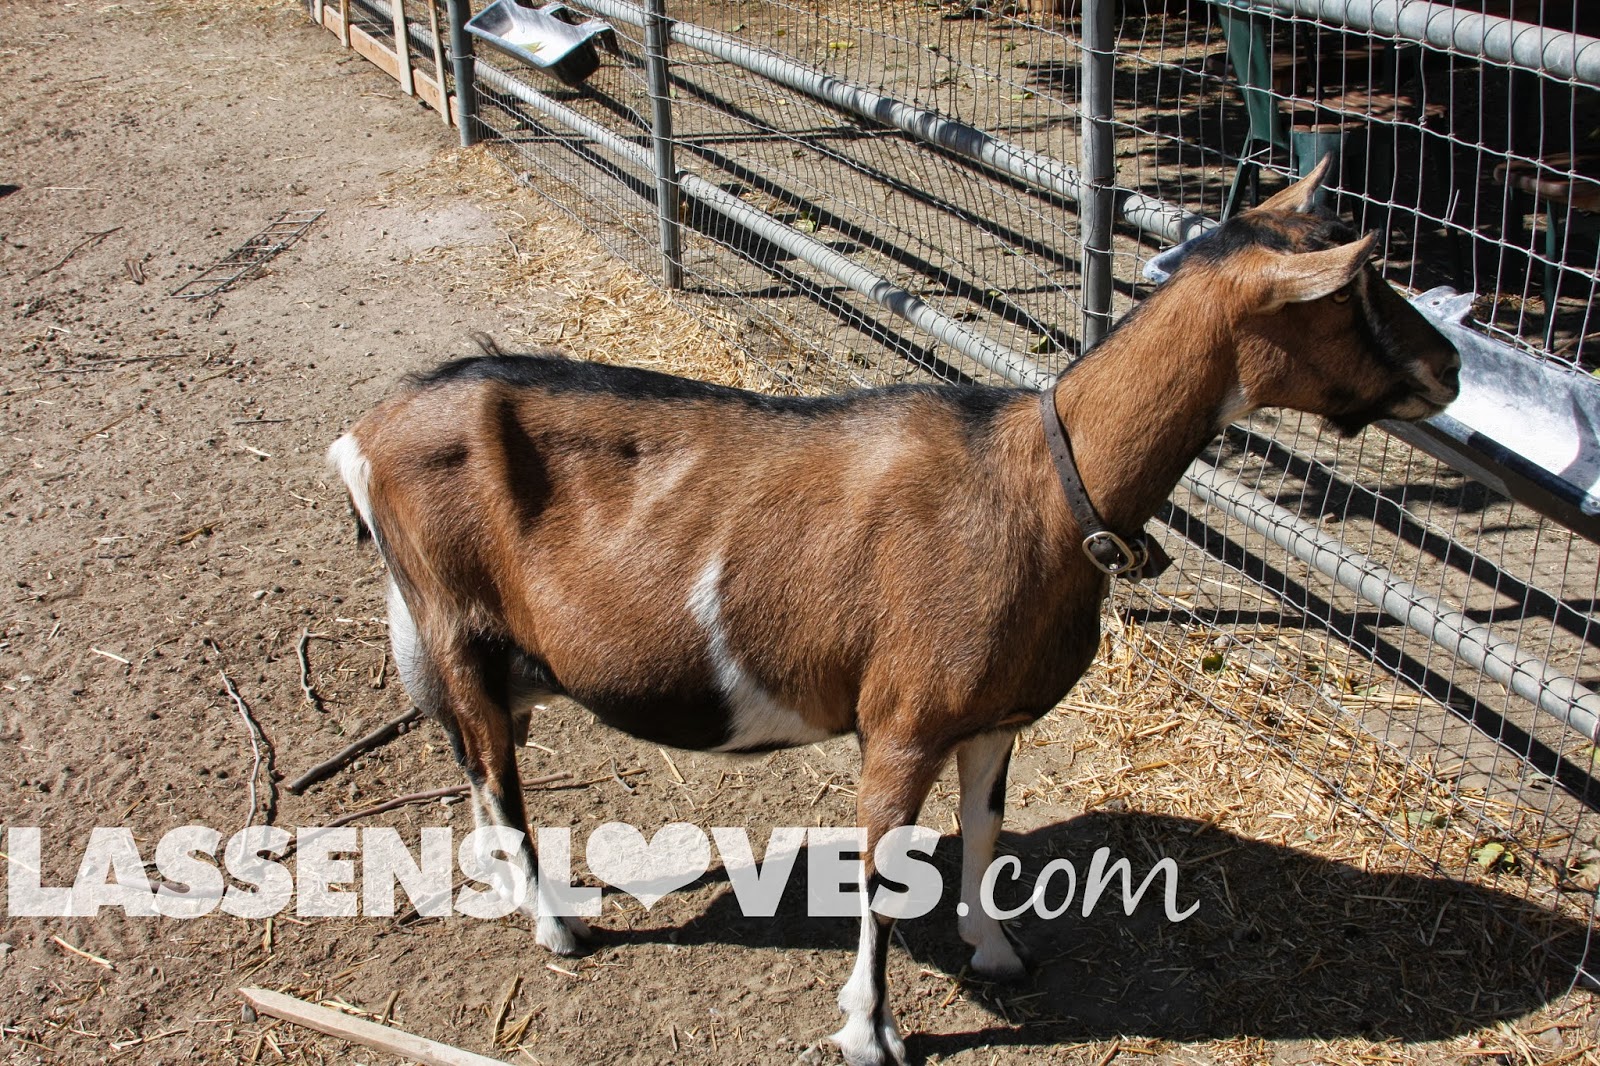 lassensloves.com, Lassen's, Chivas+Goat's+Milk+Skin+Care, Goat's+Milk